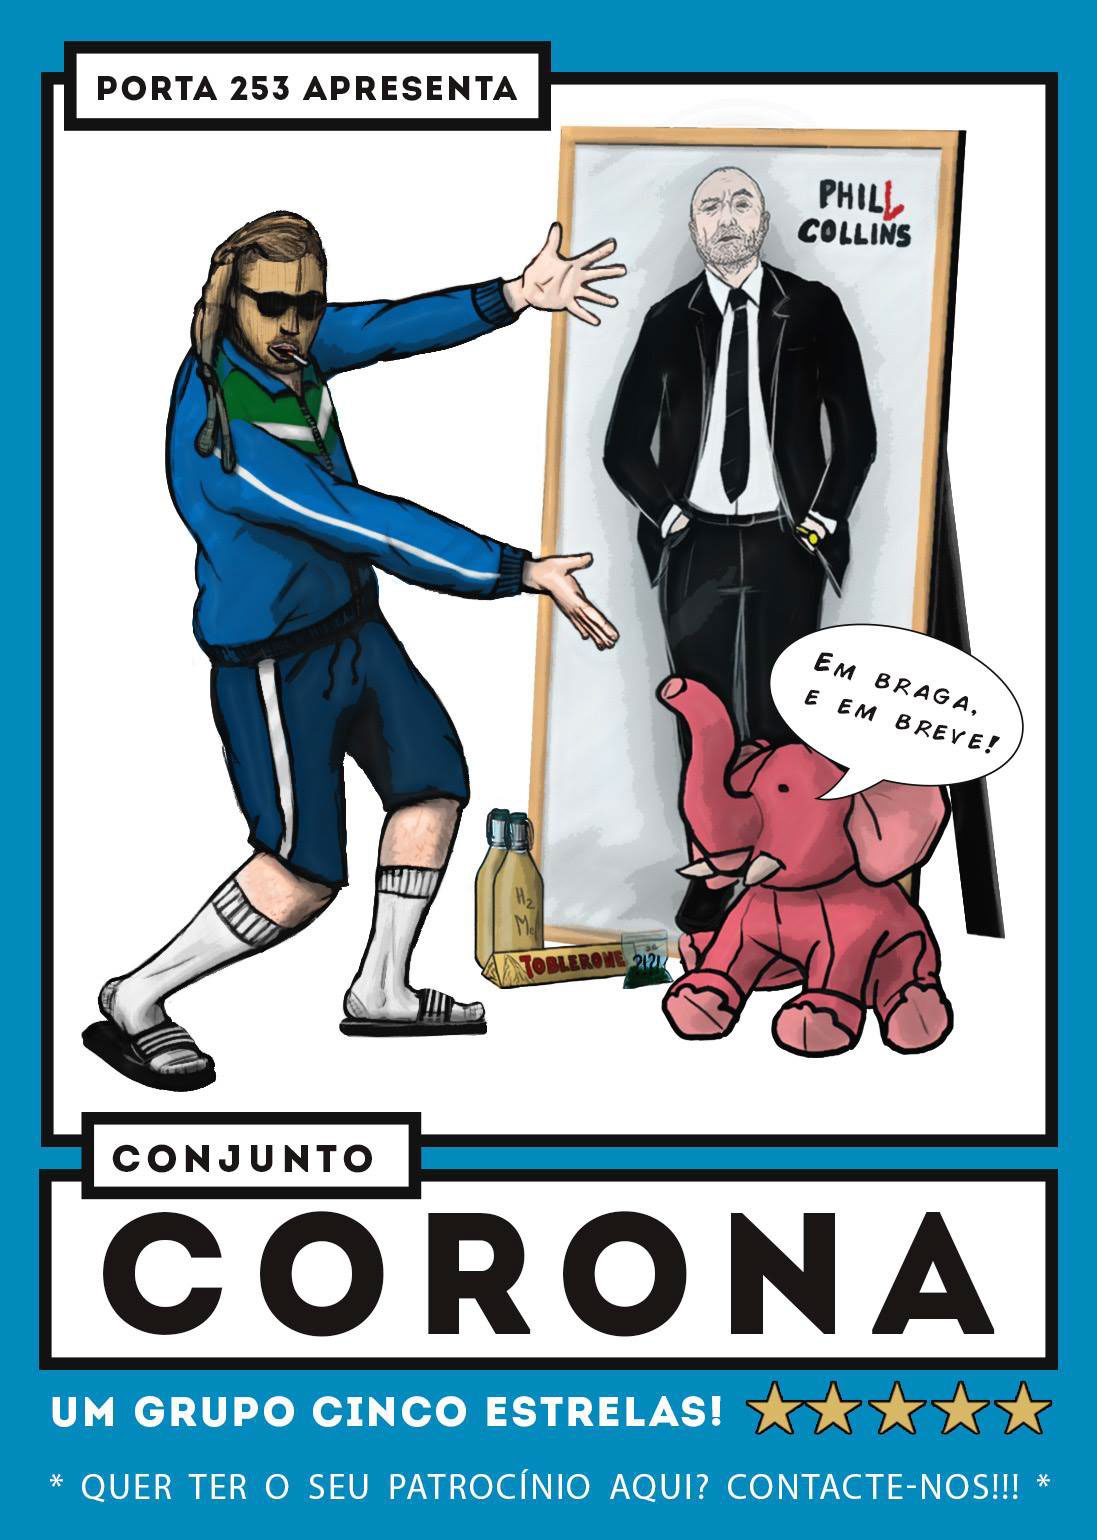 conjunto corona corona lo fi hip hop music gig poster kitsch Nonsense wacom